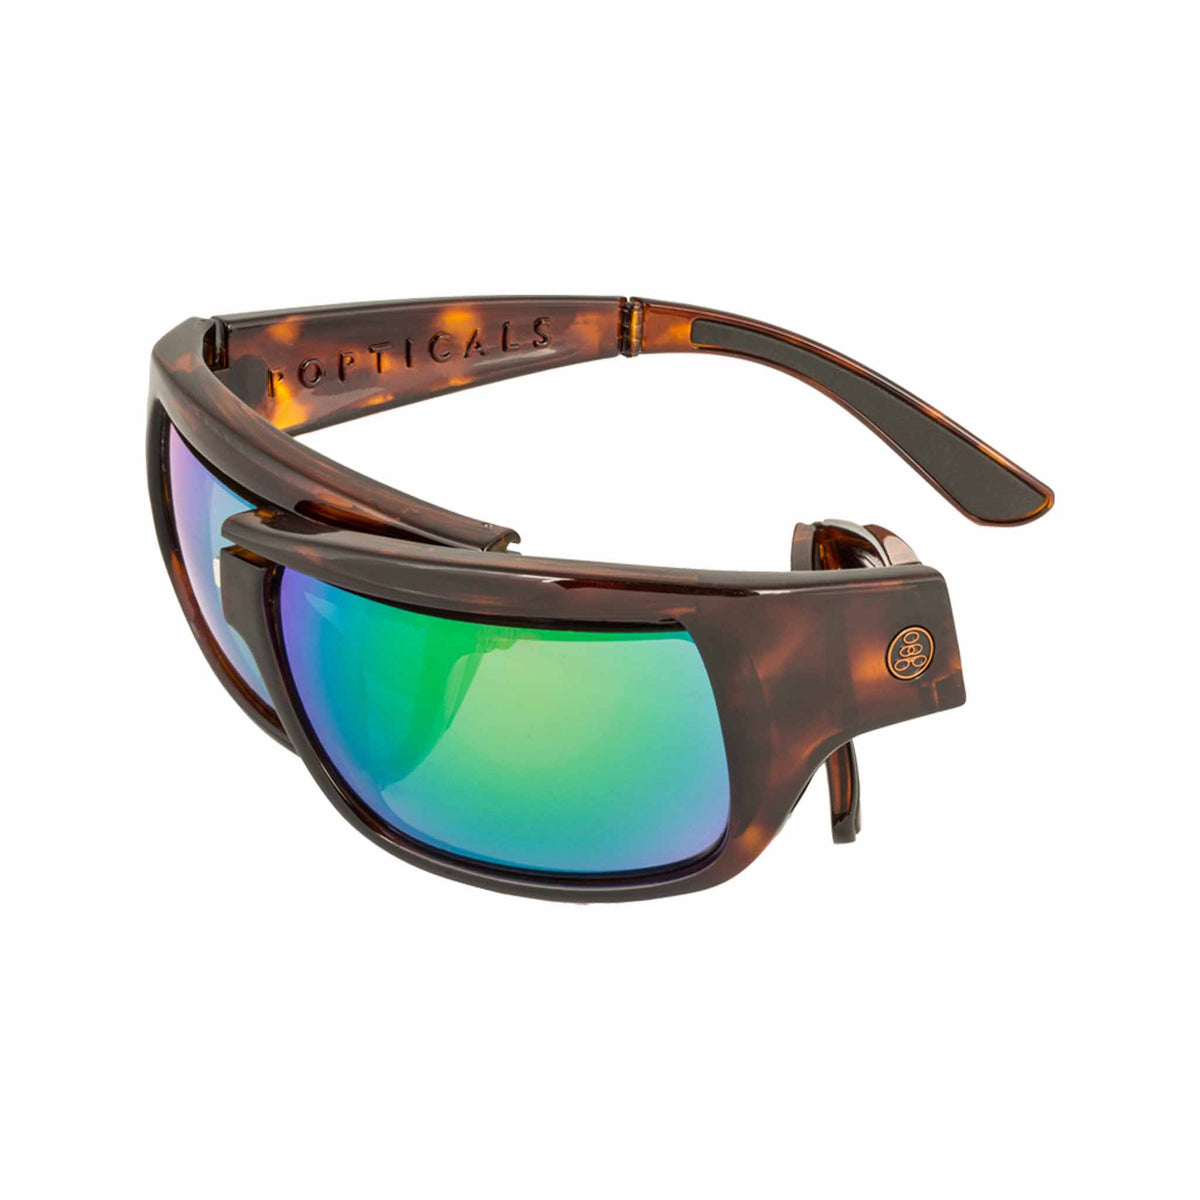 Popticals, Premium Compact Sunglasses, PopH2O, 010070-CTEN, Polarized Sunglasses, Gloss Tortoise Frame, Gray Lenses w/Green Mirror Finish, Spider View